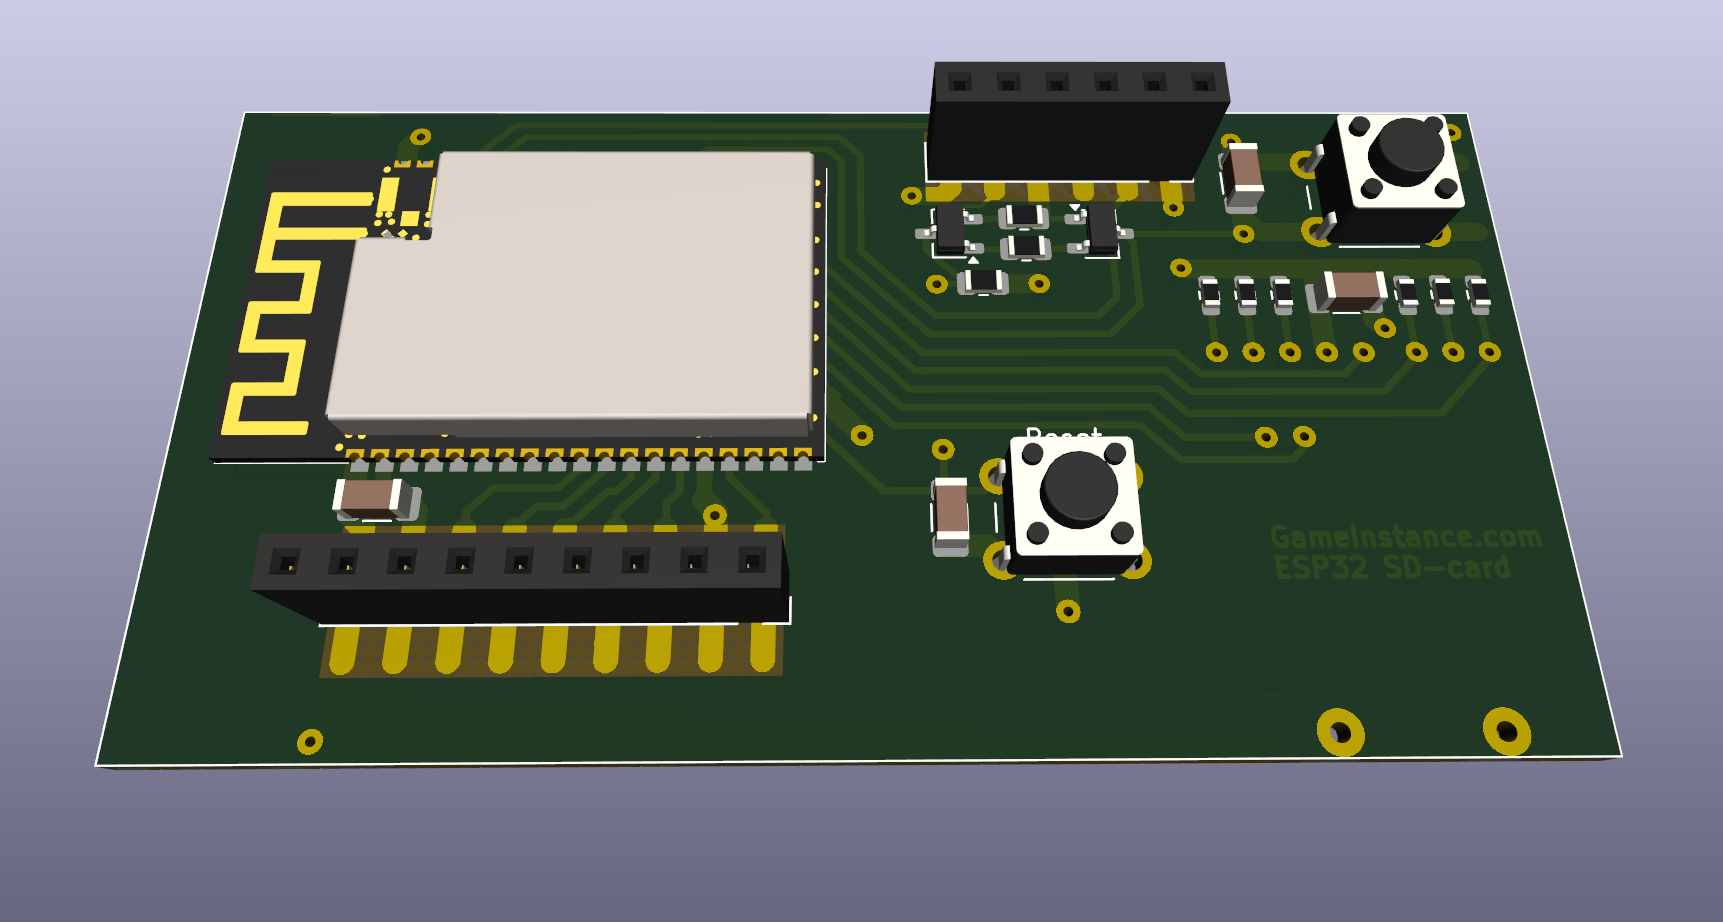 Logic board: ESP32, micro-SD card socket, serial port with reset + boot capabilities.